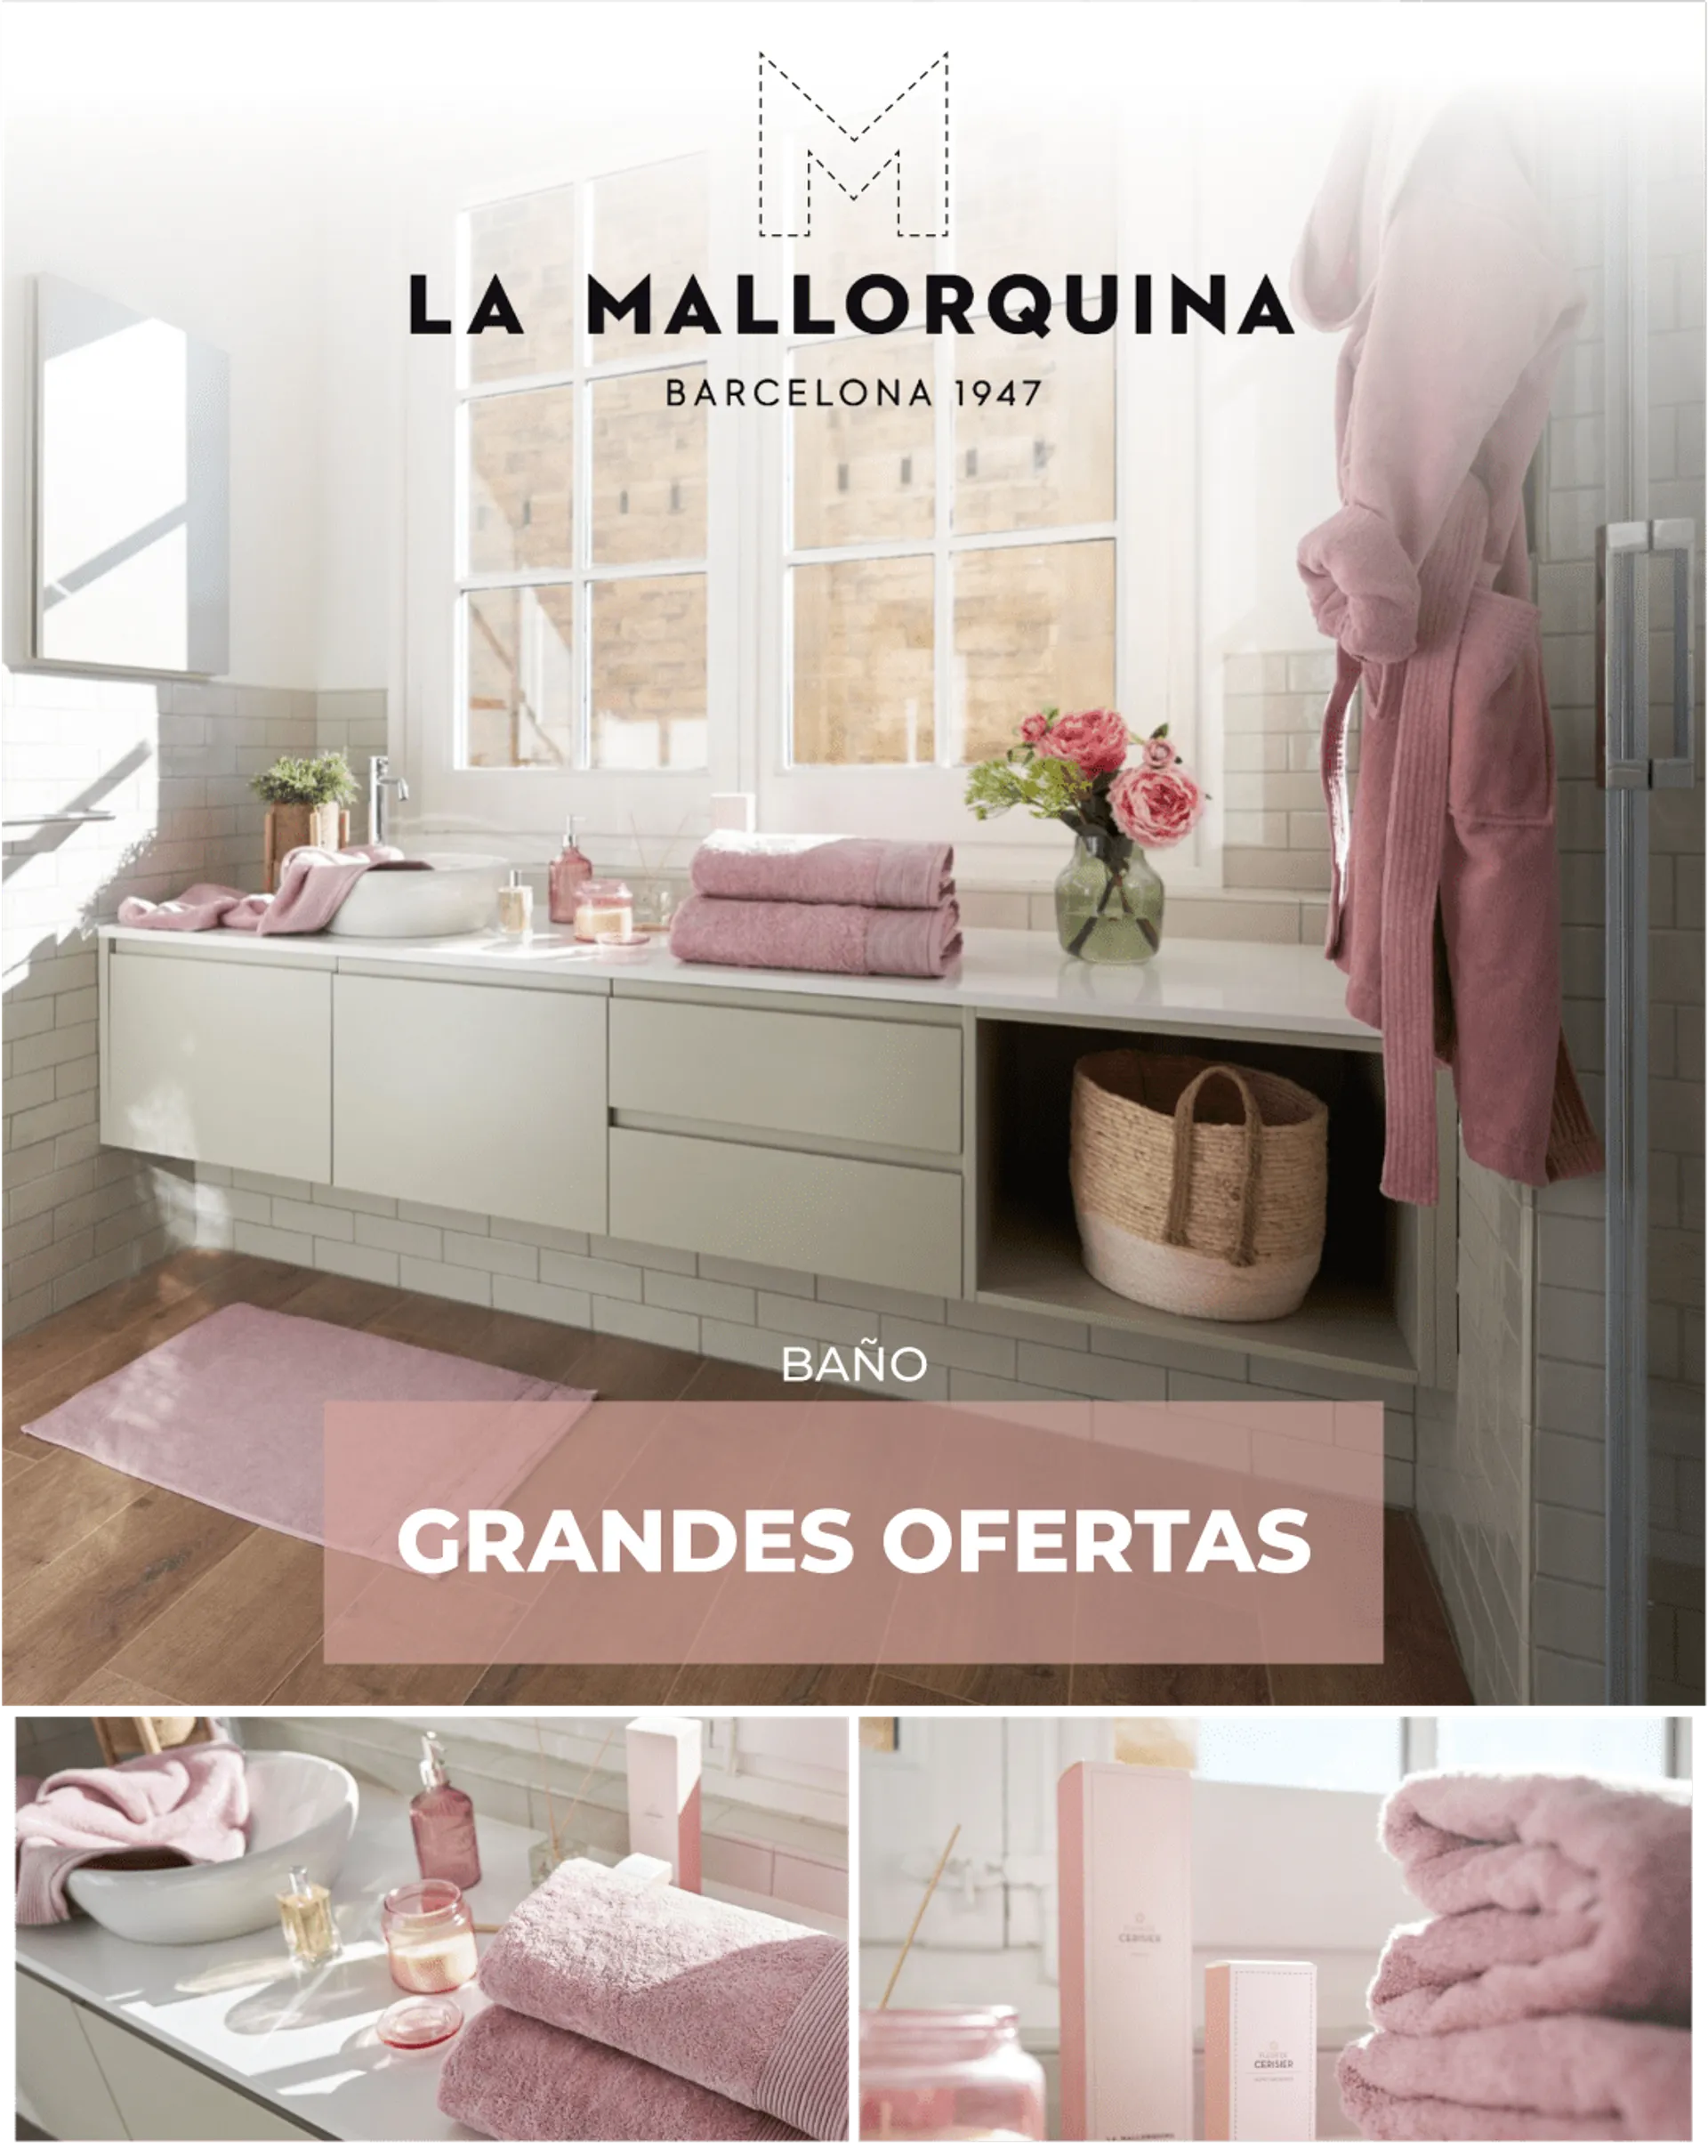 La Mallorquina - Baño